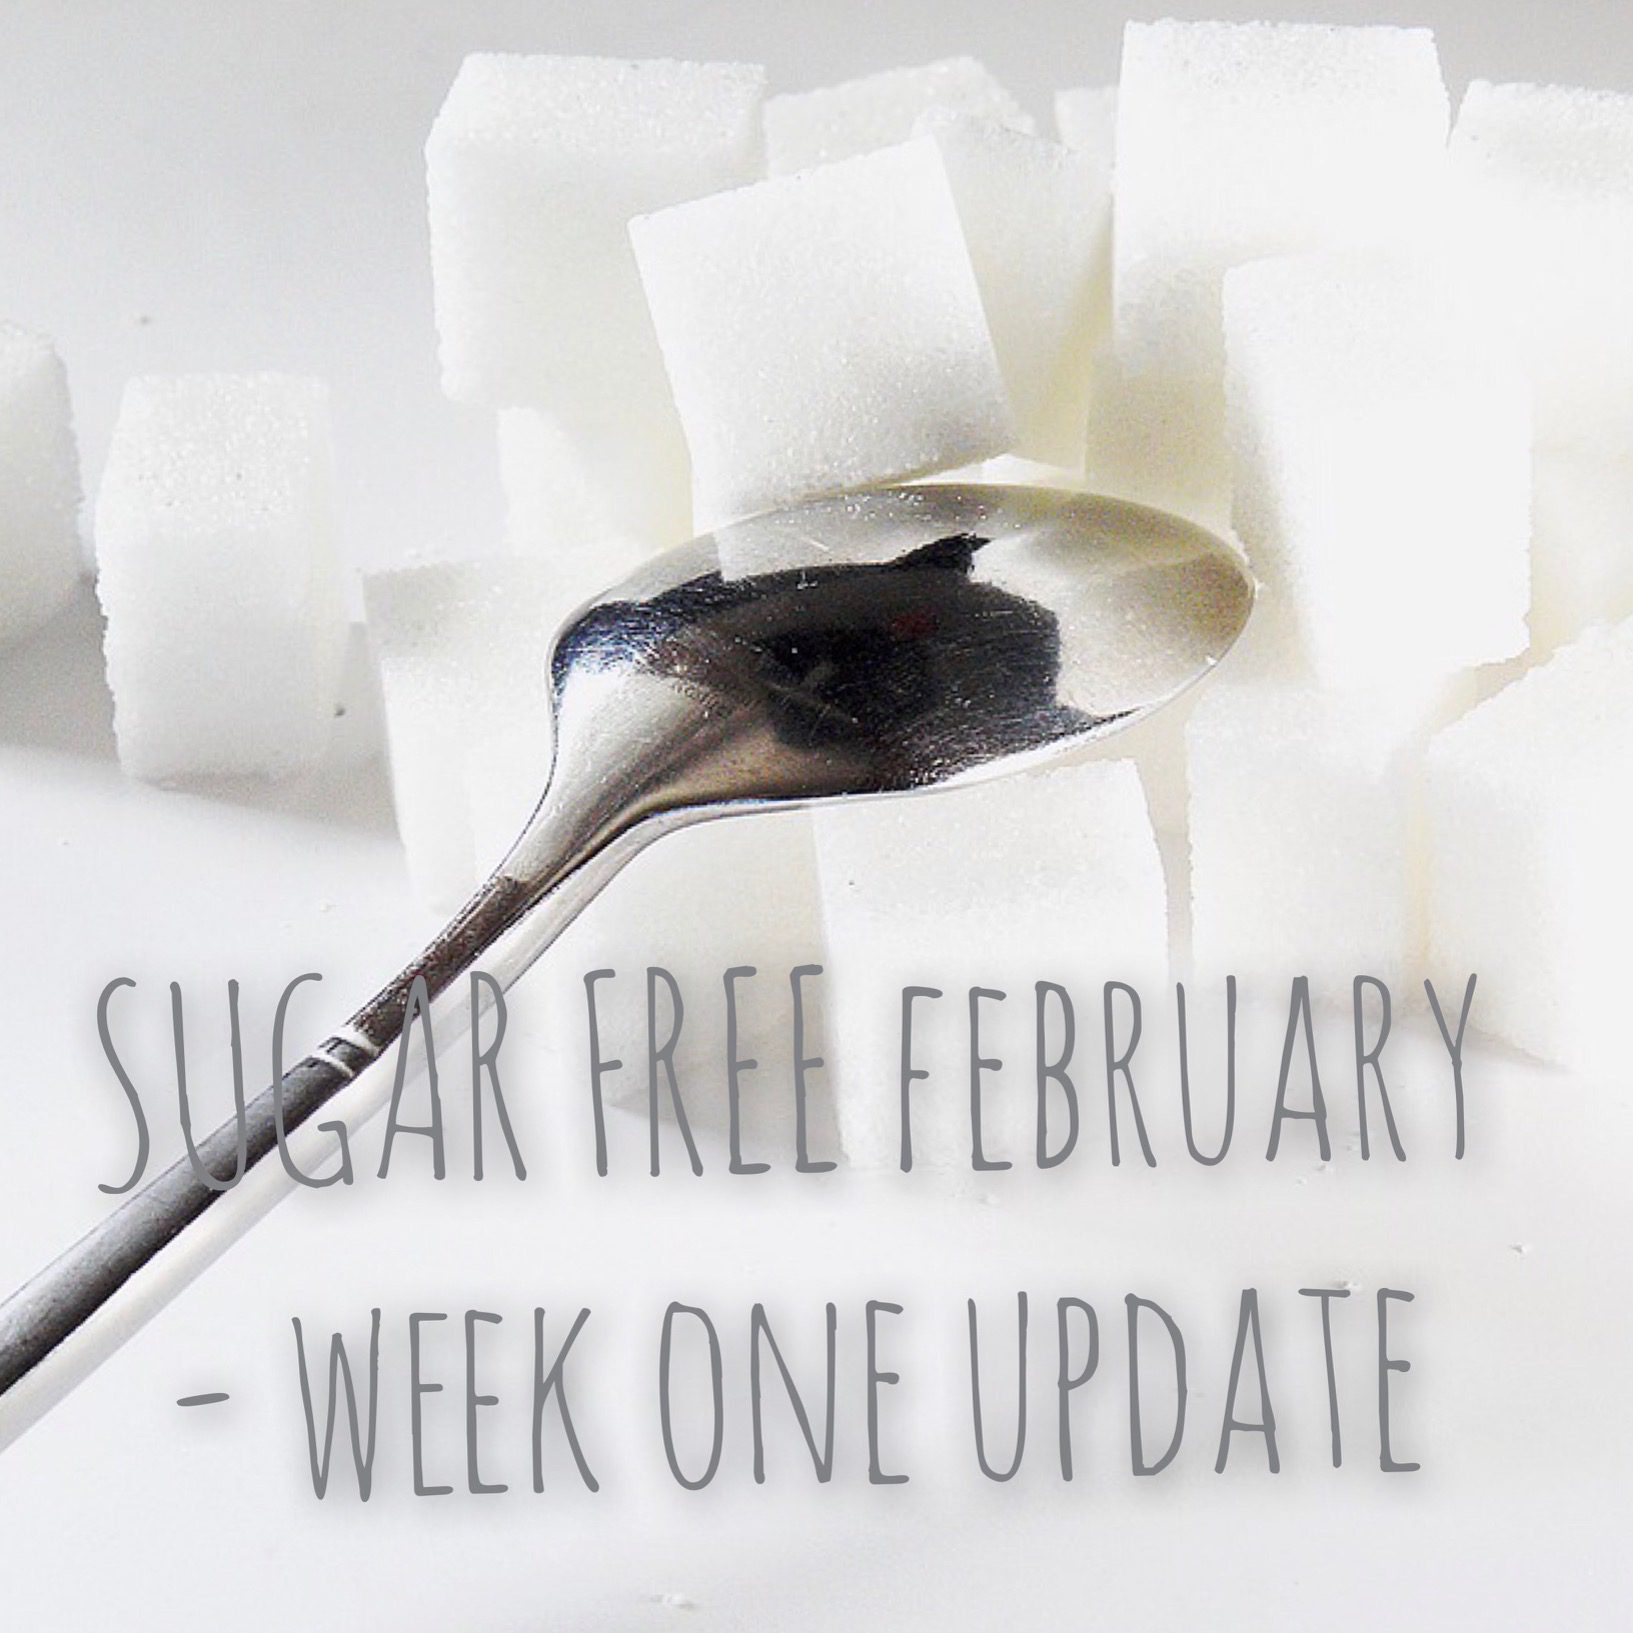 Sugar Free February